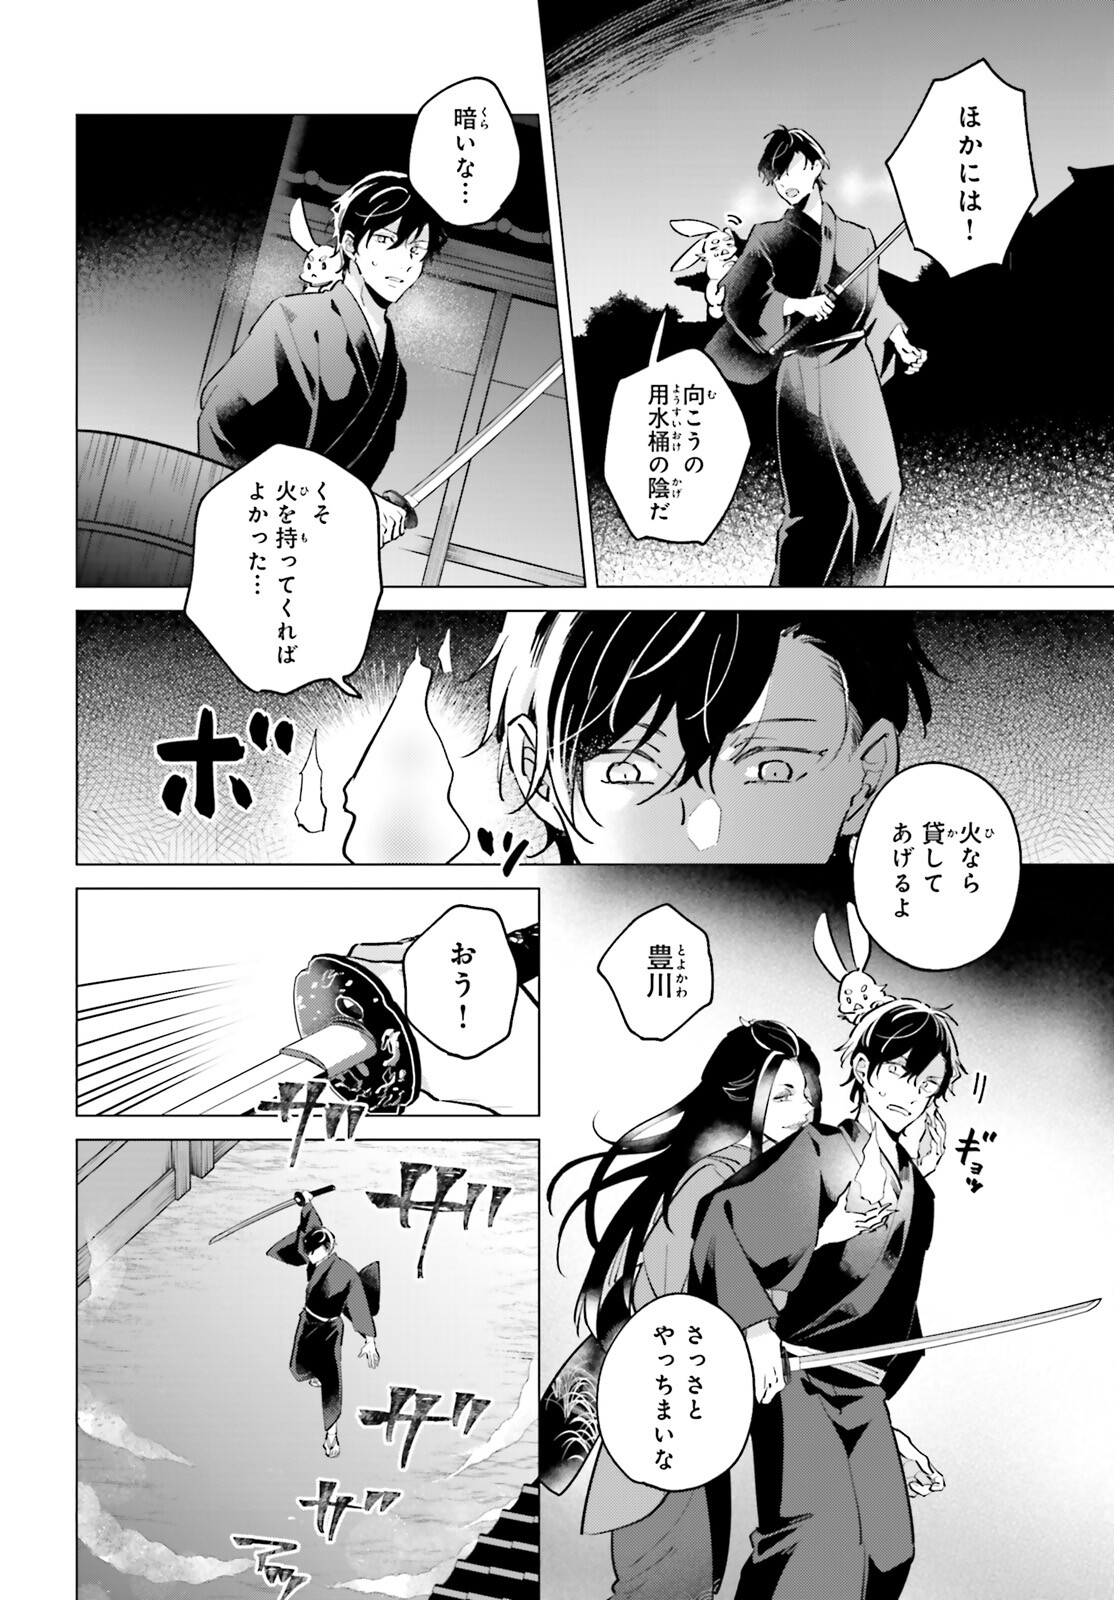 Kamisama no Youjinbou - Chapter 13 - Page 2